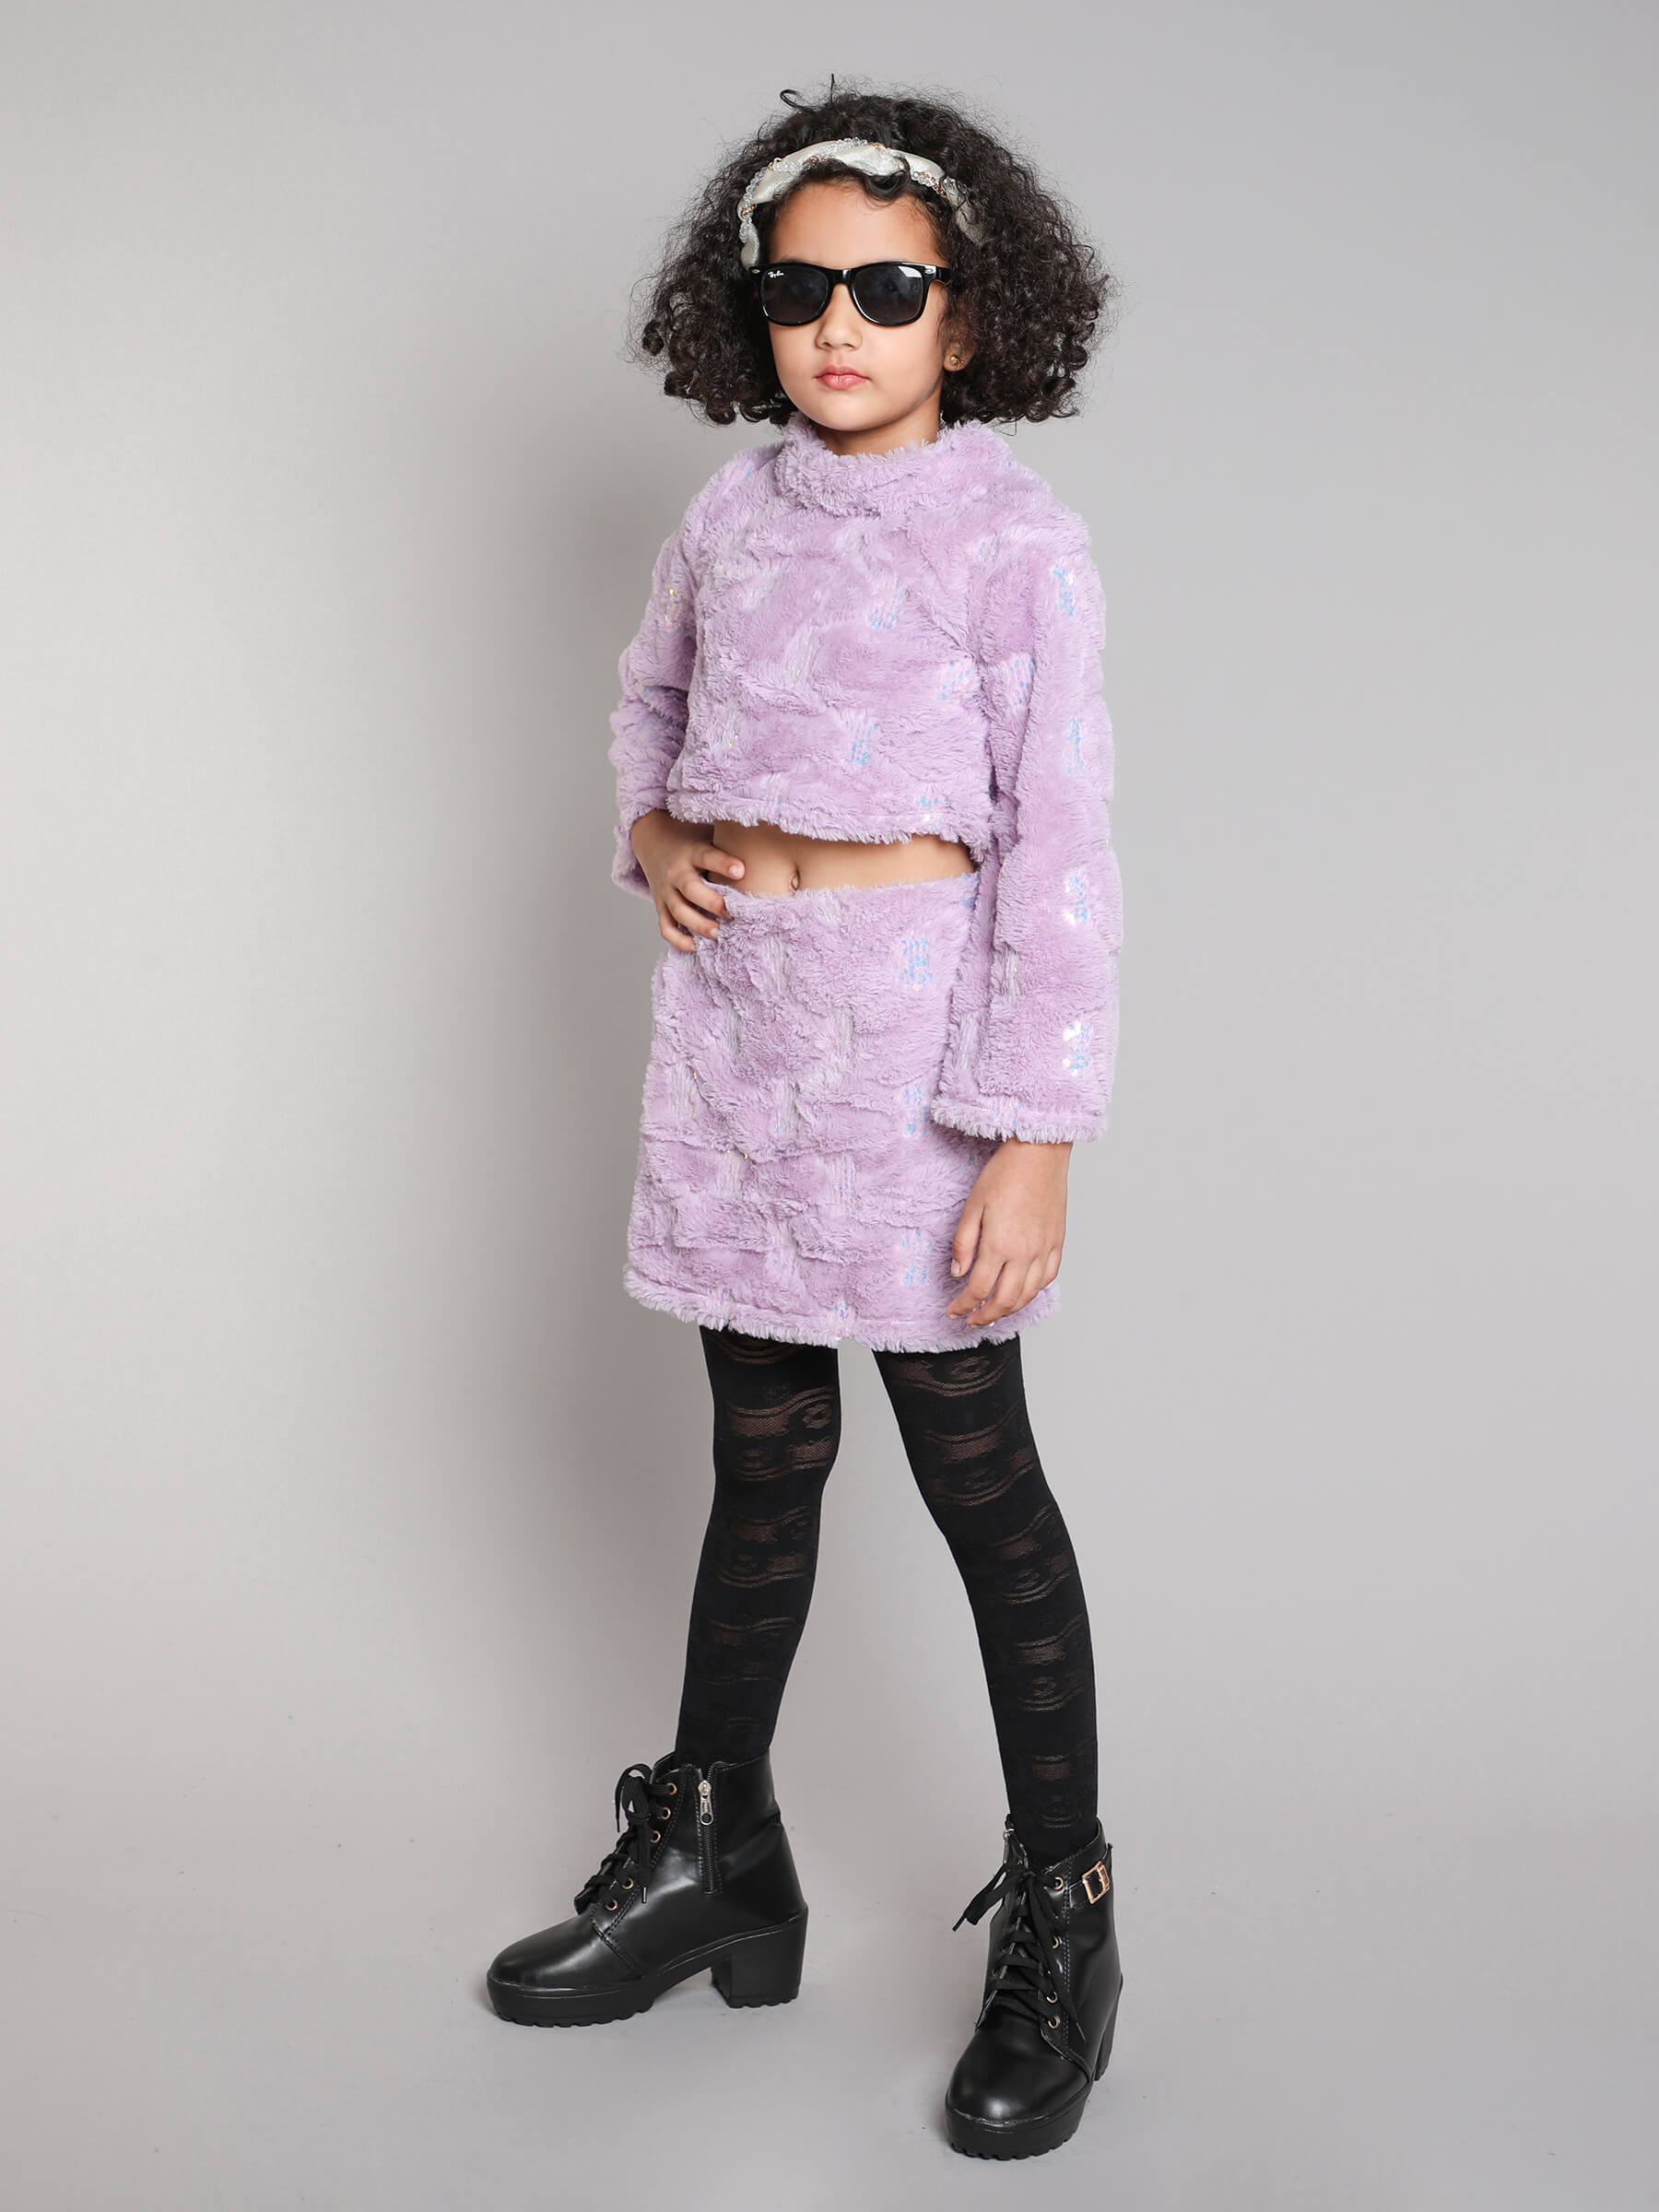 Taffykids sequins Embellished high neck bell sleeves crop top and skirt set-lilac